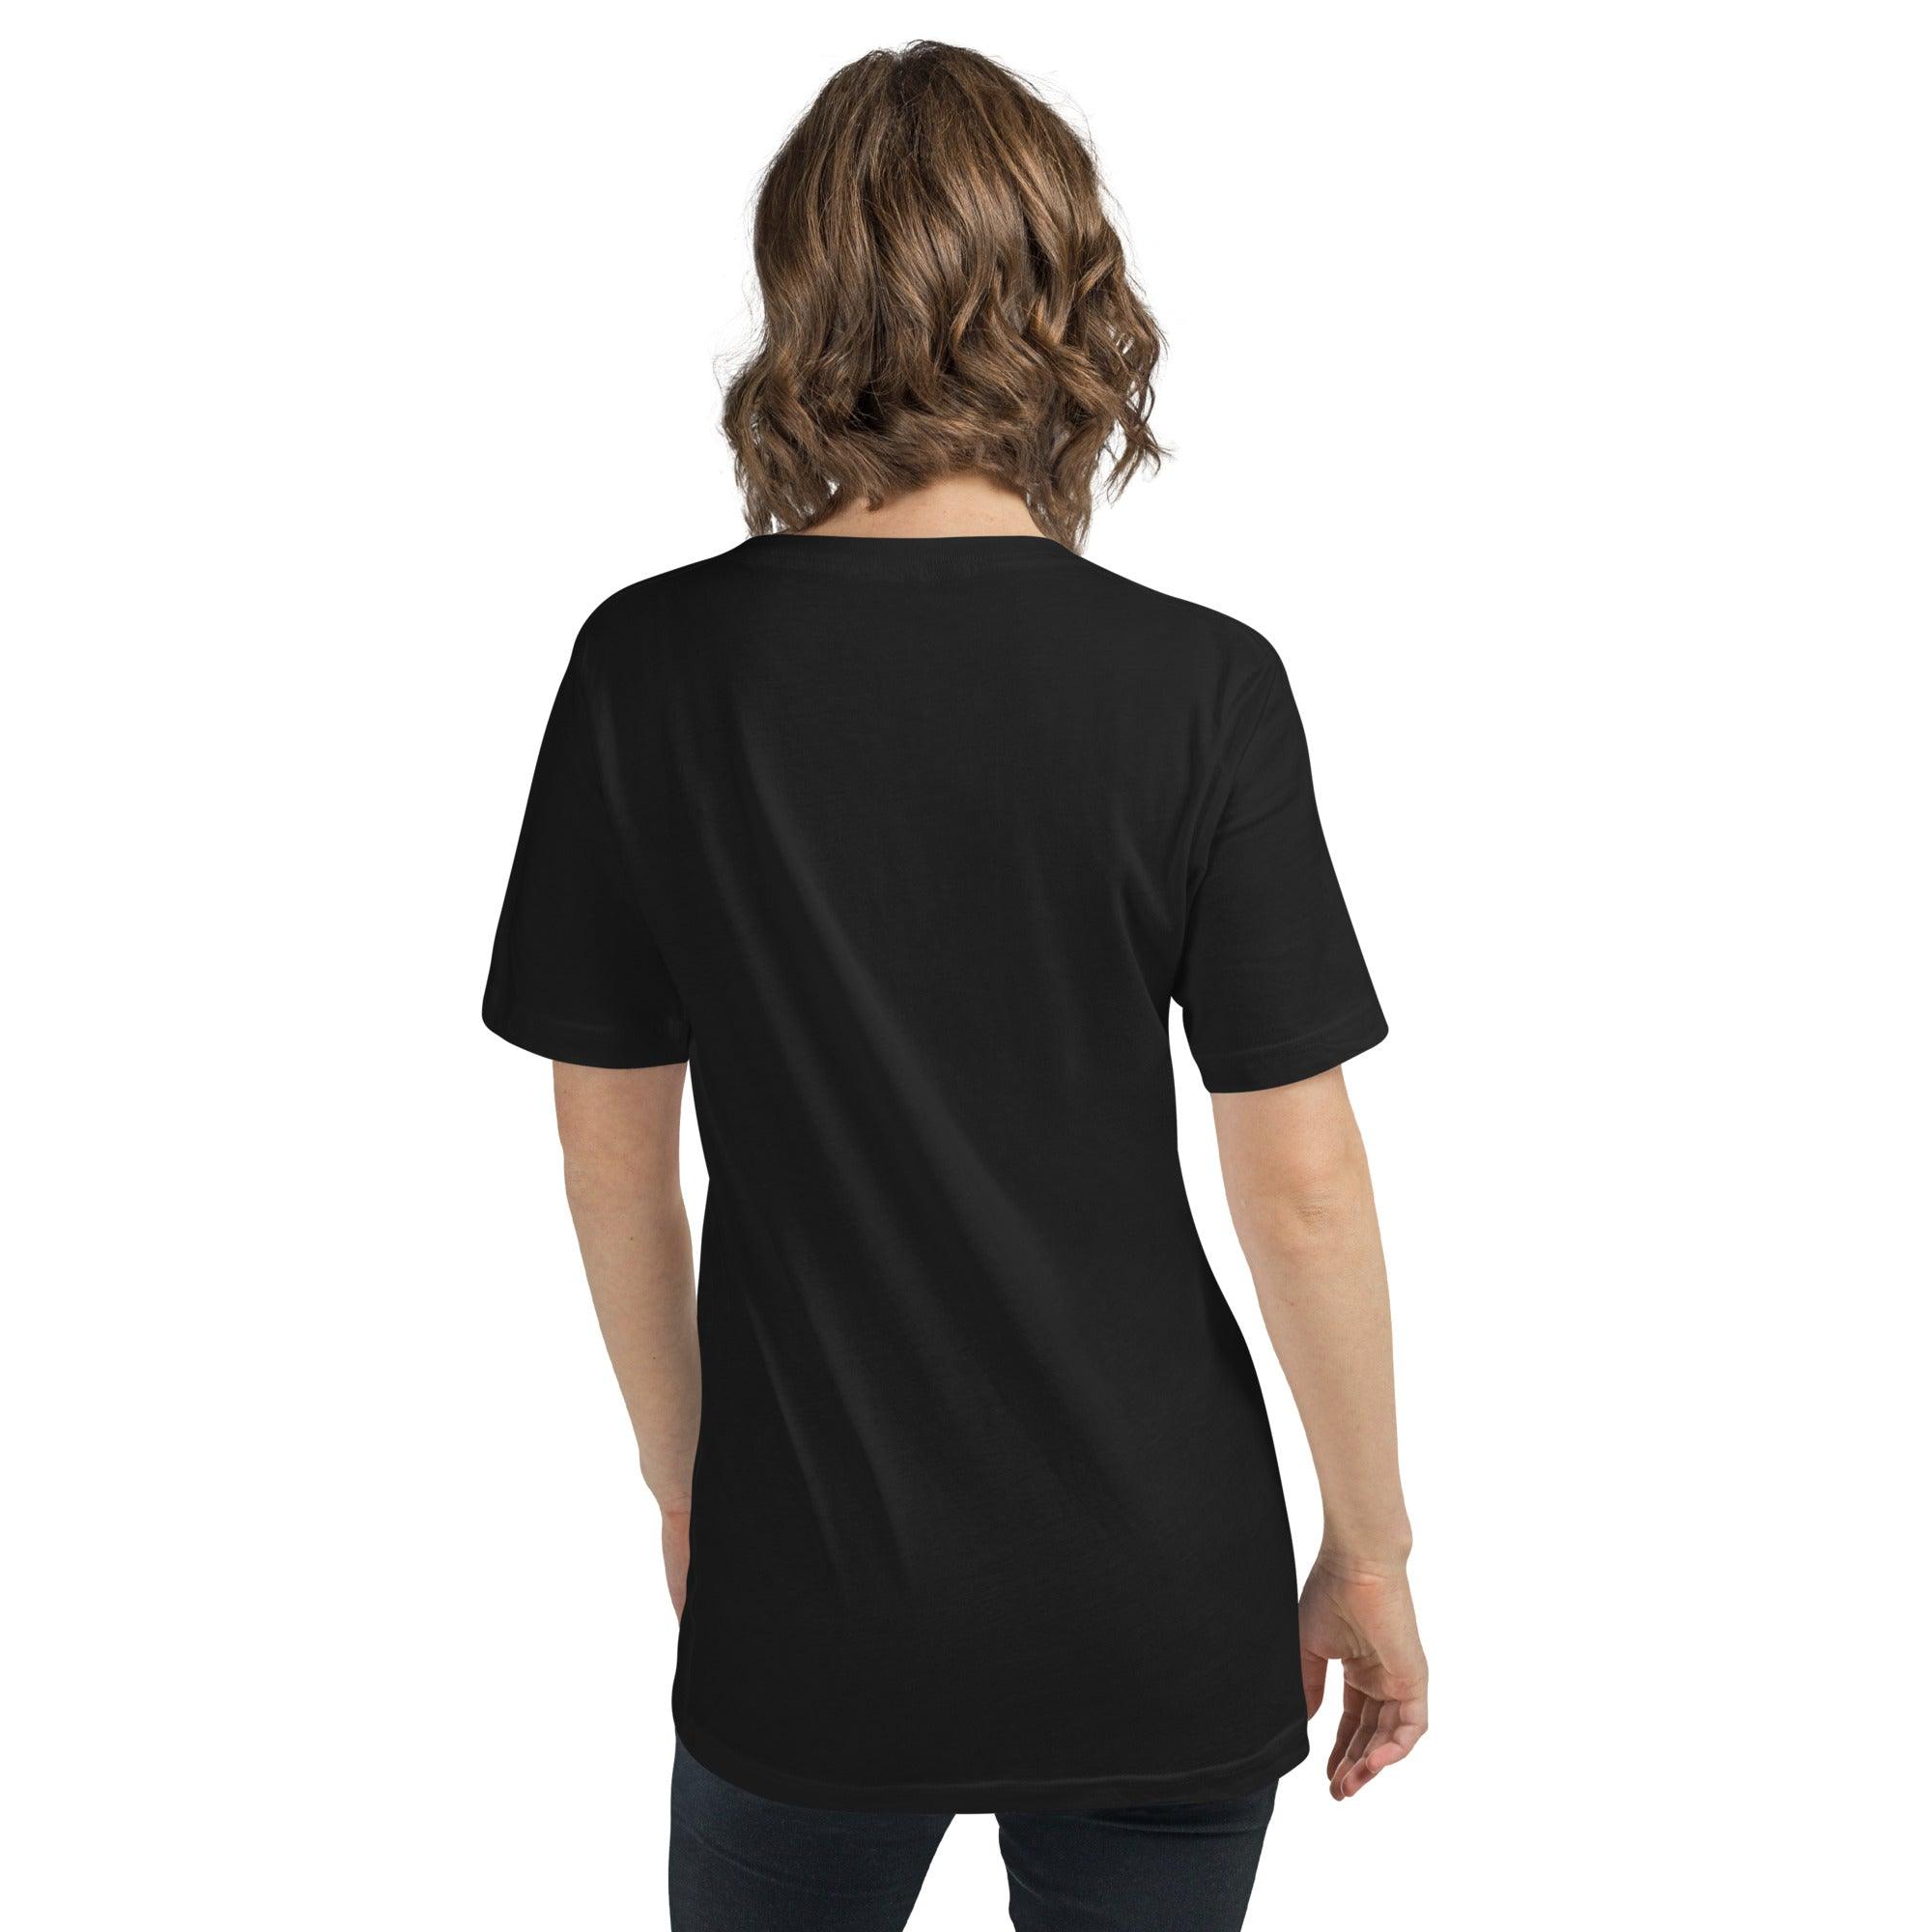 It's Art Unisex Short Sleeve V-Neck T-Shirt - Beyond T-shirts